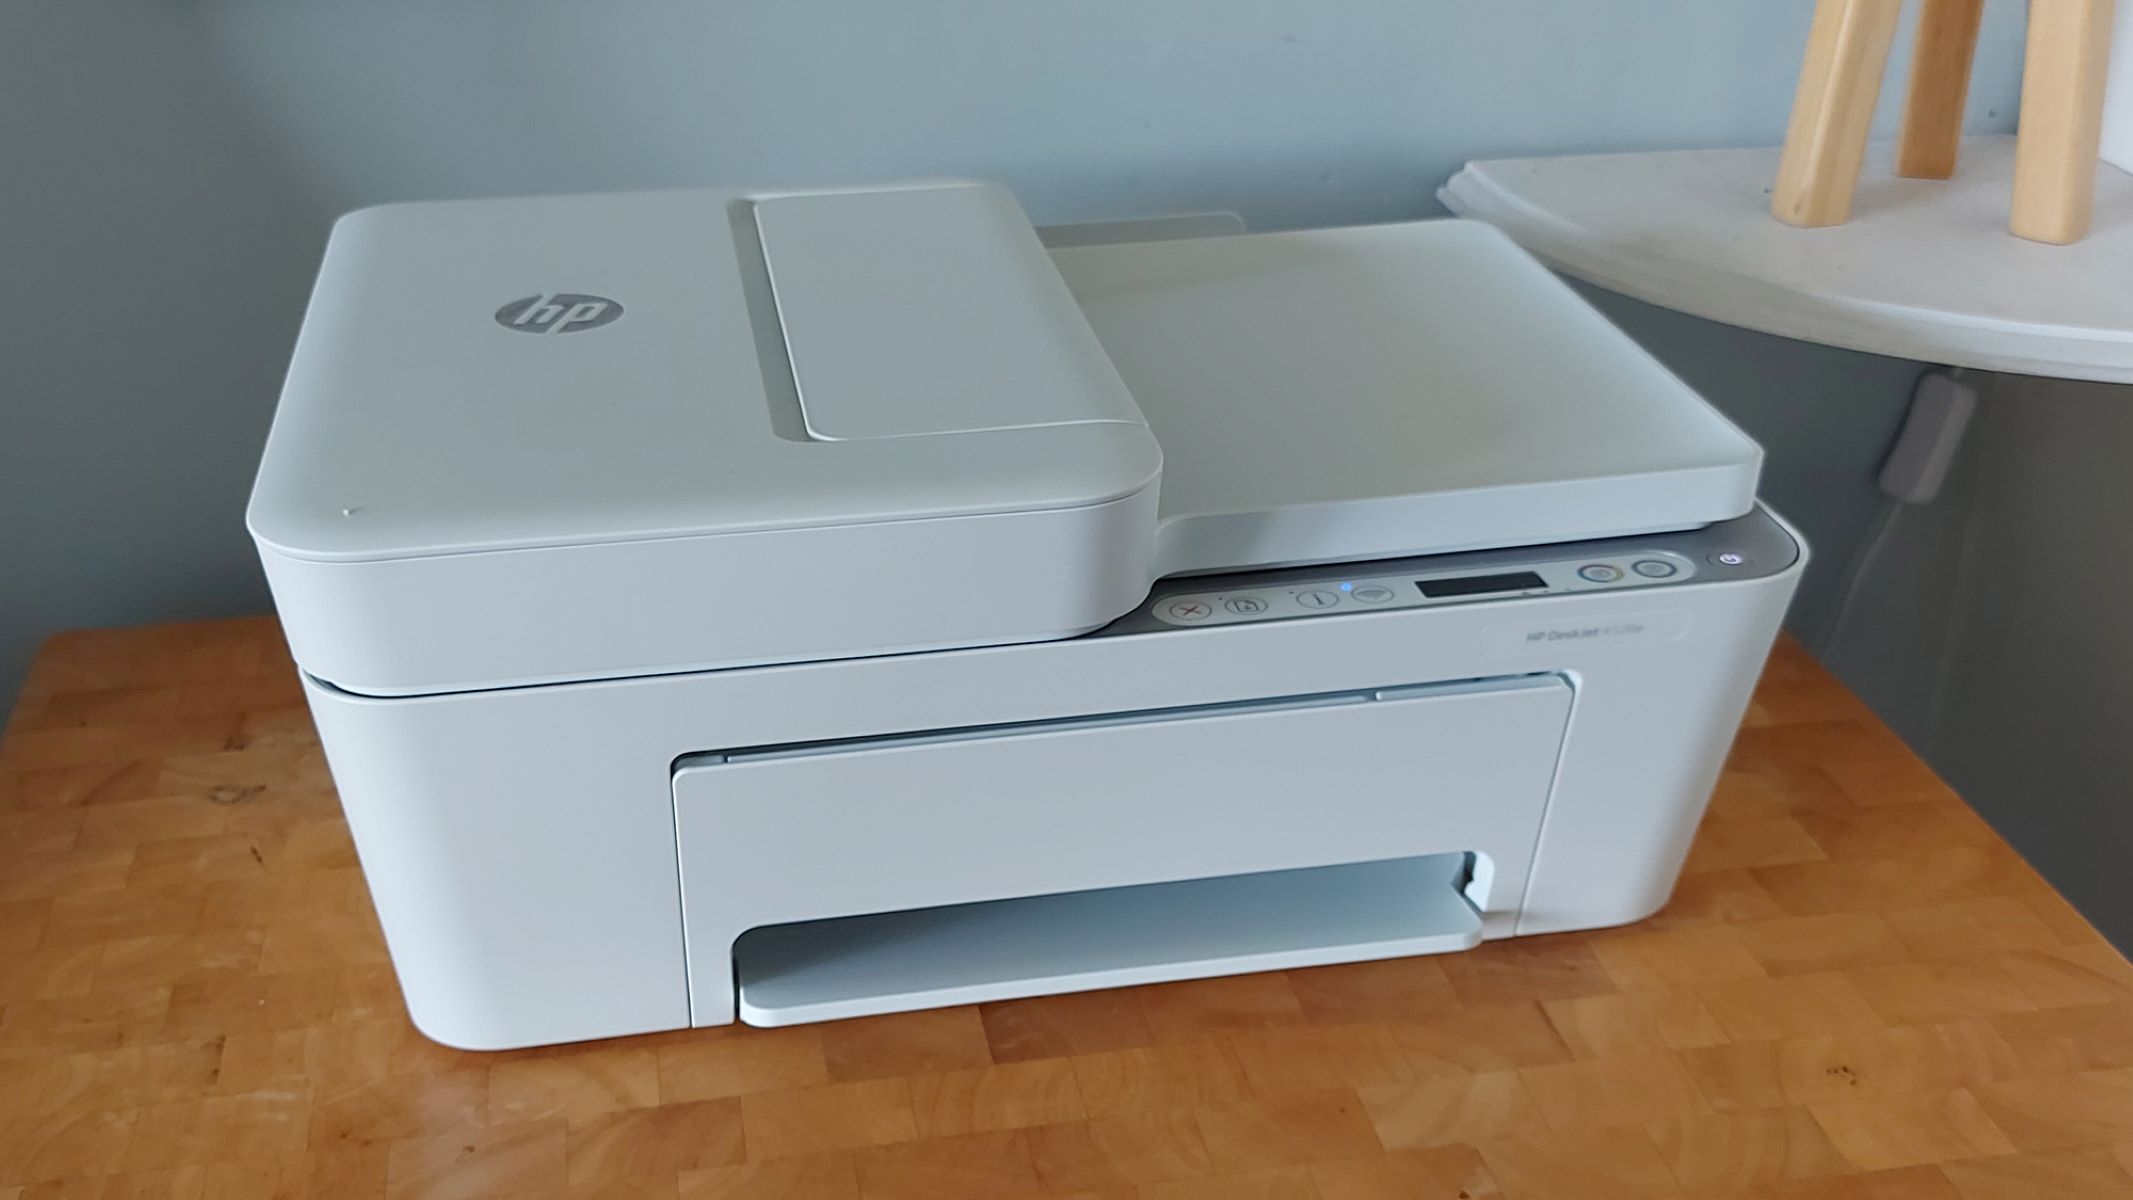 Why Is My HP Printer So Slow